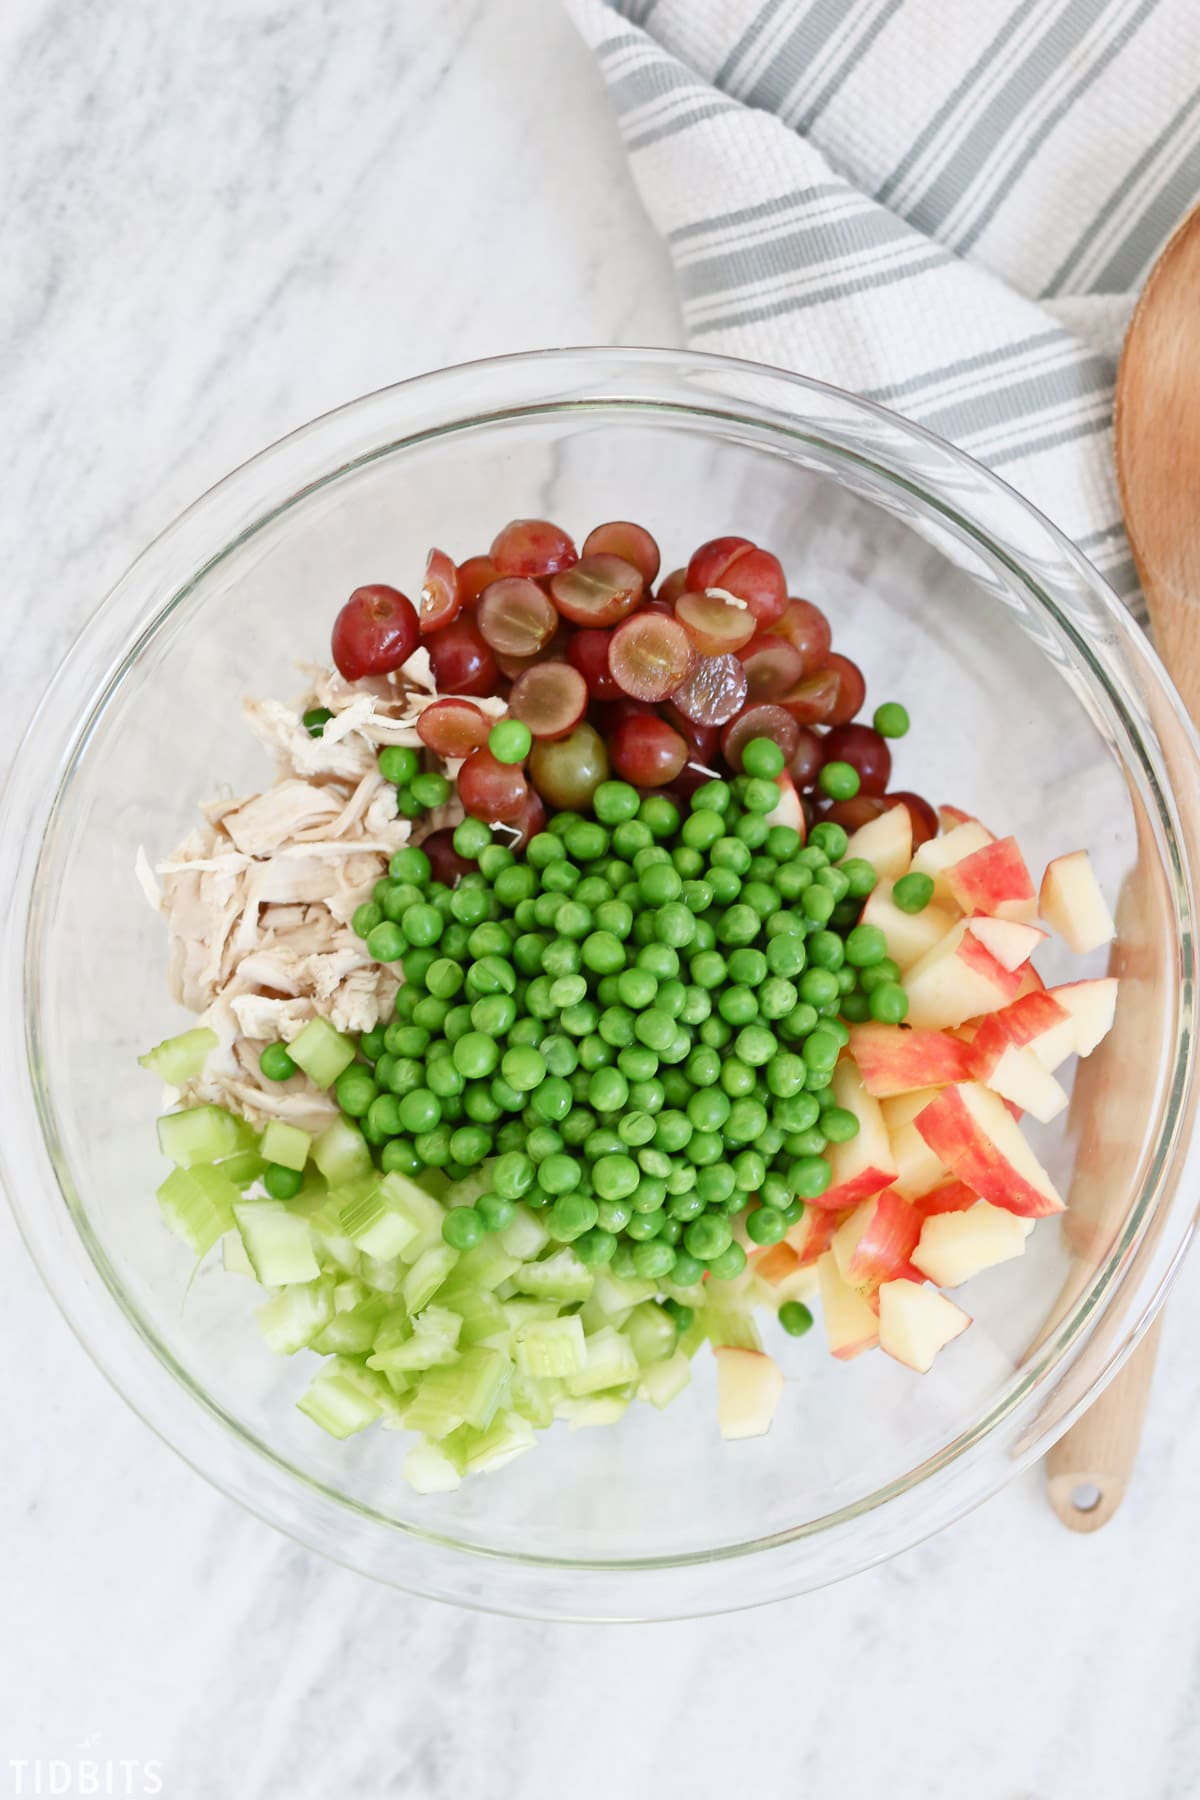 Light and Healthy Chicken Salad Recipe with Yogurt Dressing